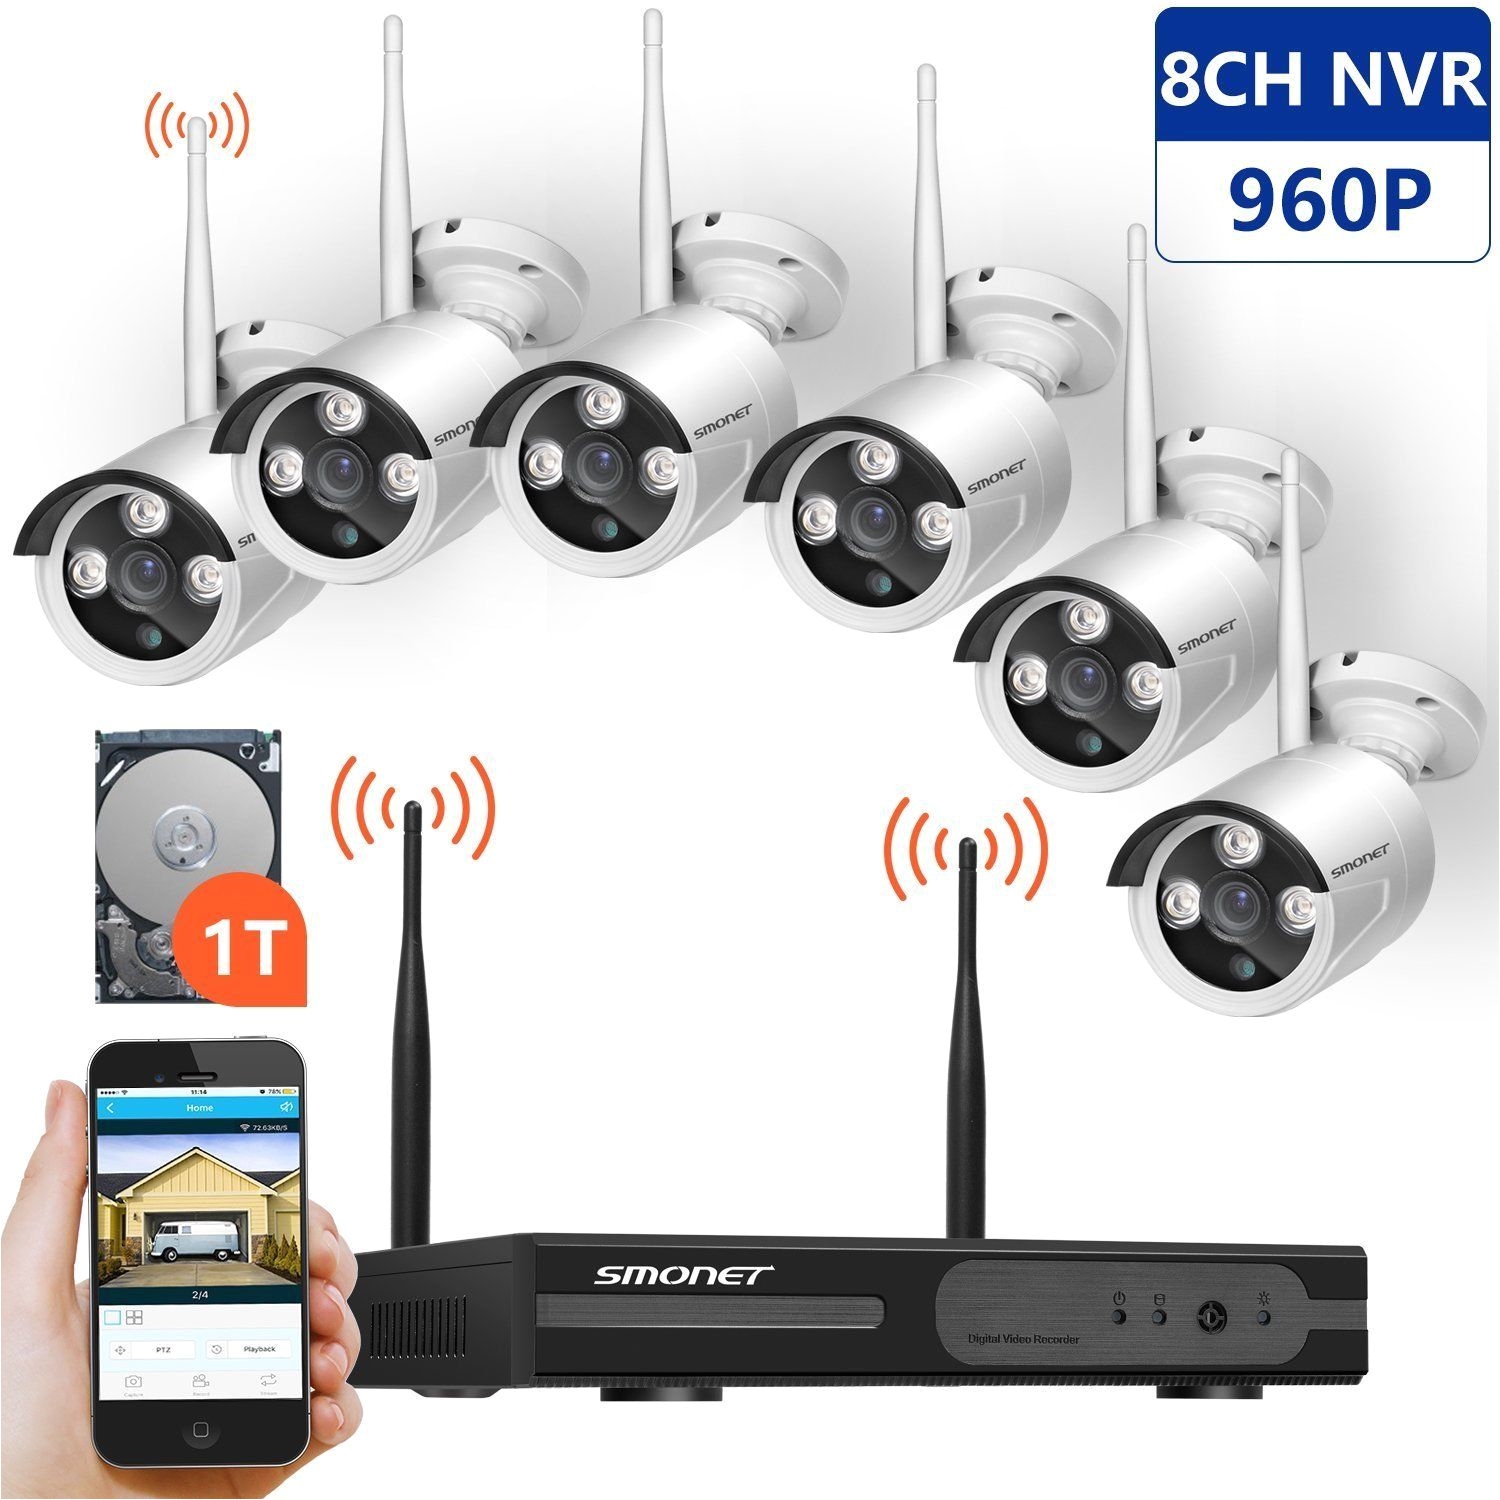 surveillance security camera system night vision 960p wireless ip indoor outdoor